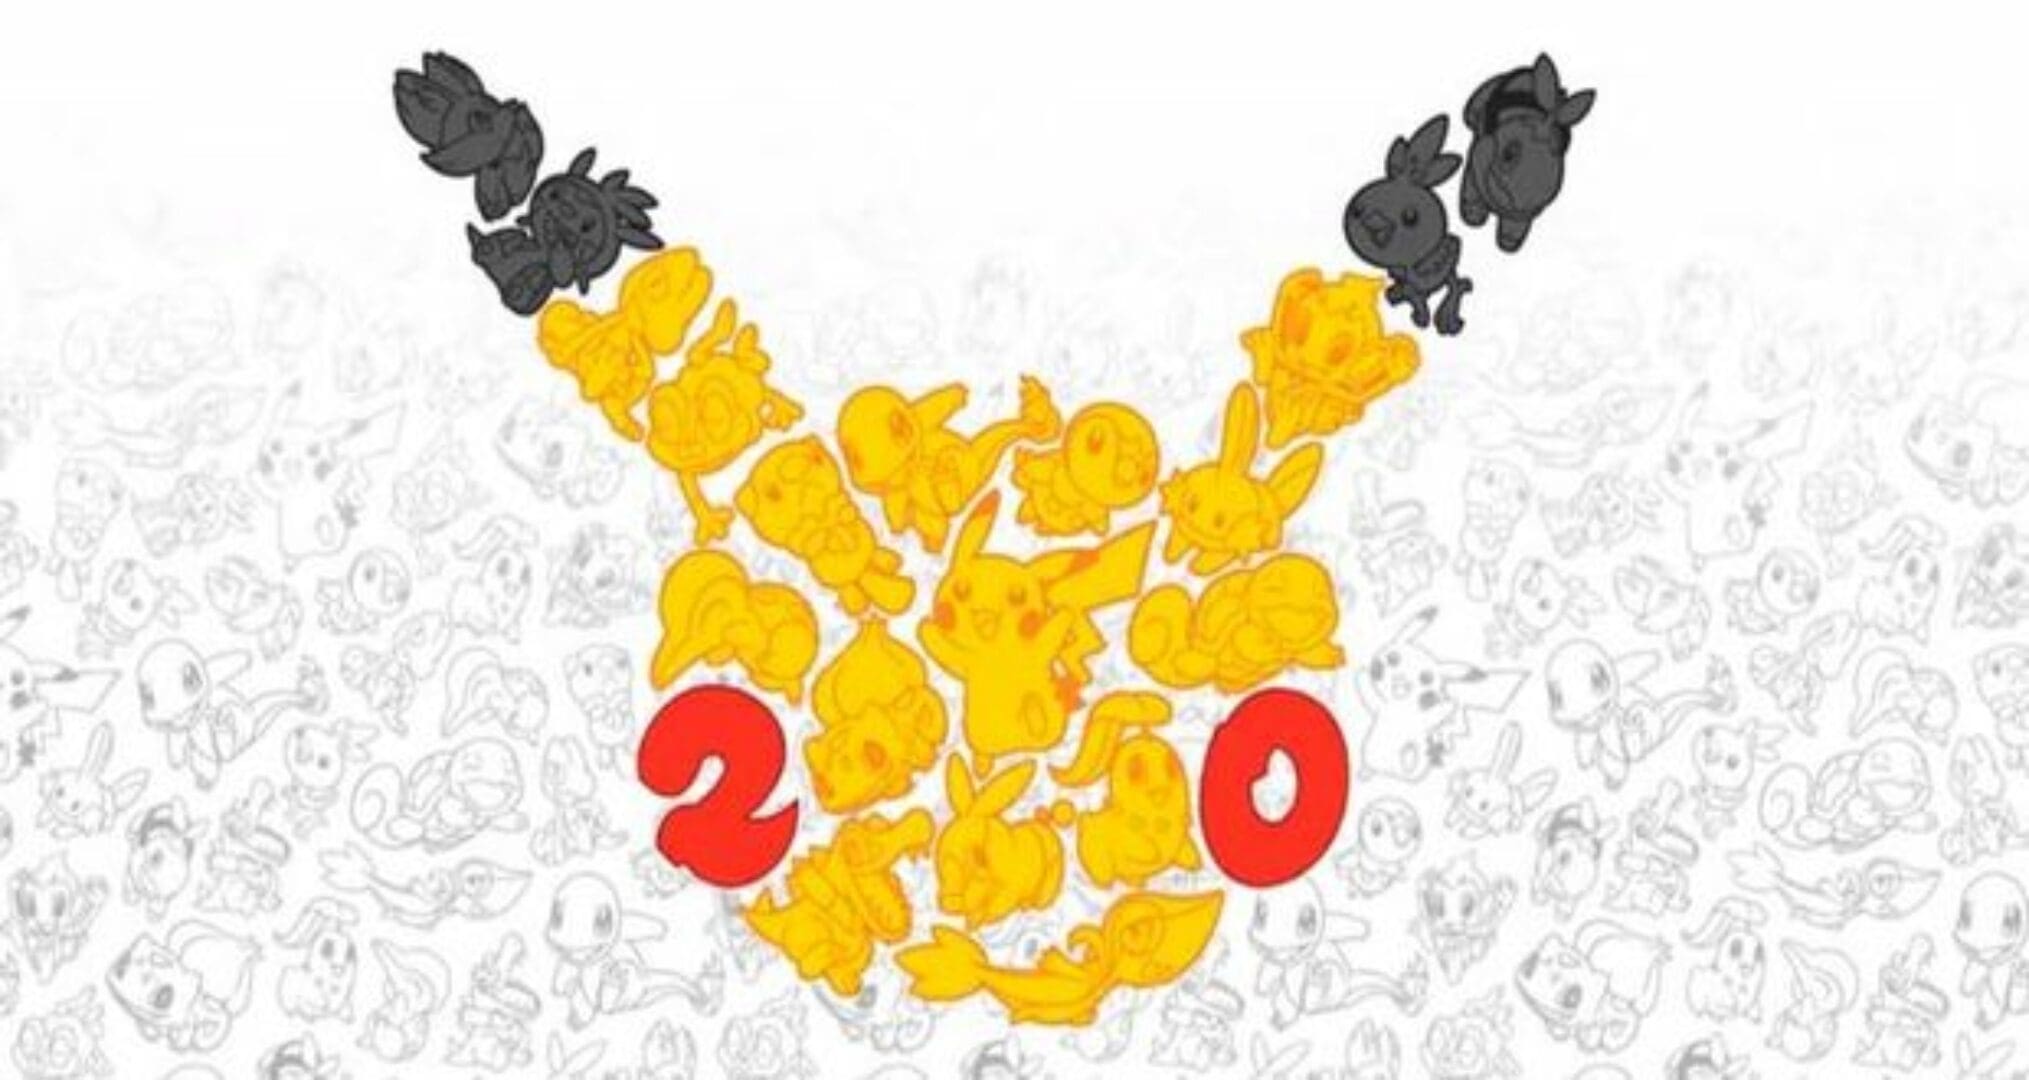 Pokémon Anniversary Gets a Little More Legendary